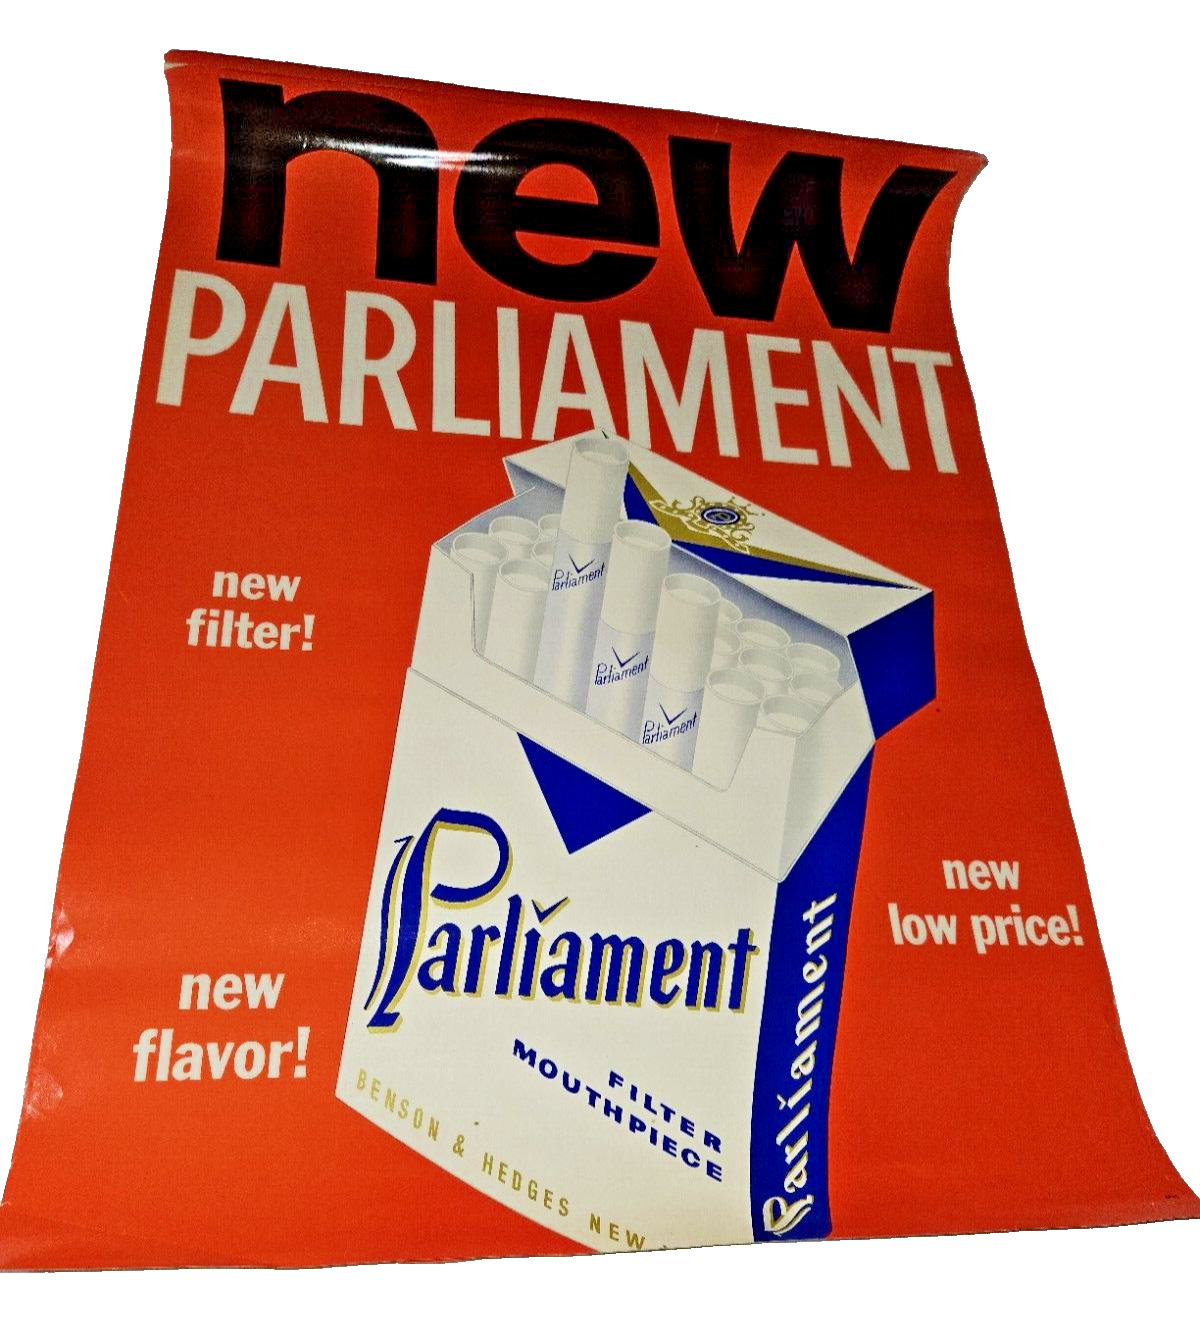 VTG New Parliament Cigarette Metal Advertising Poster 26 x 18 in BENSON HEDGES